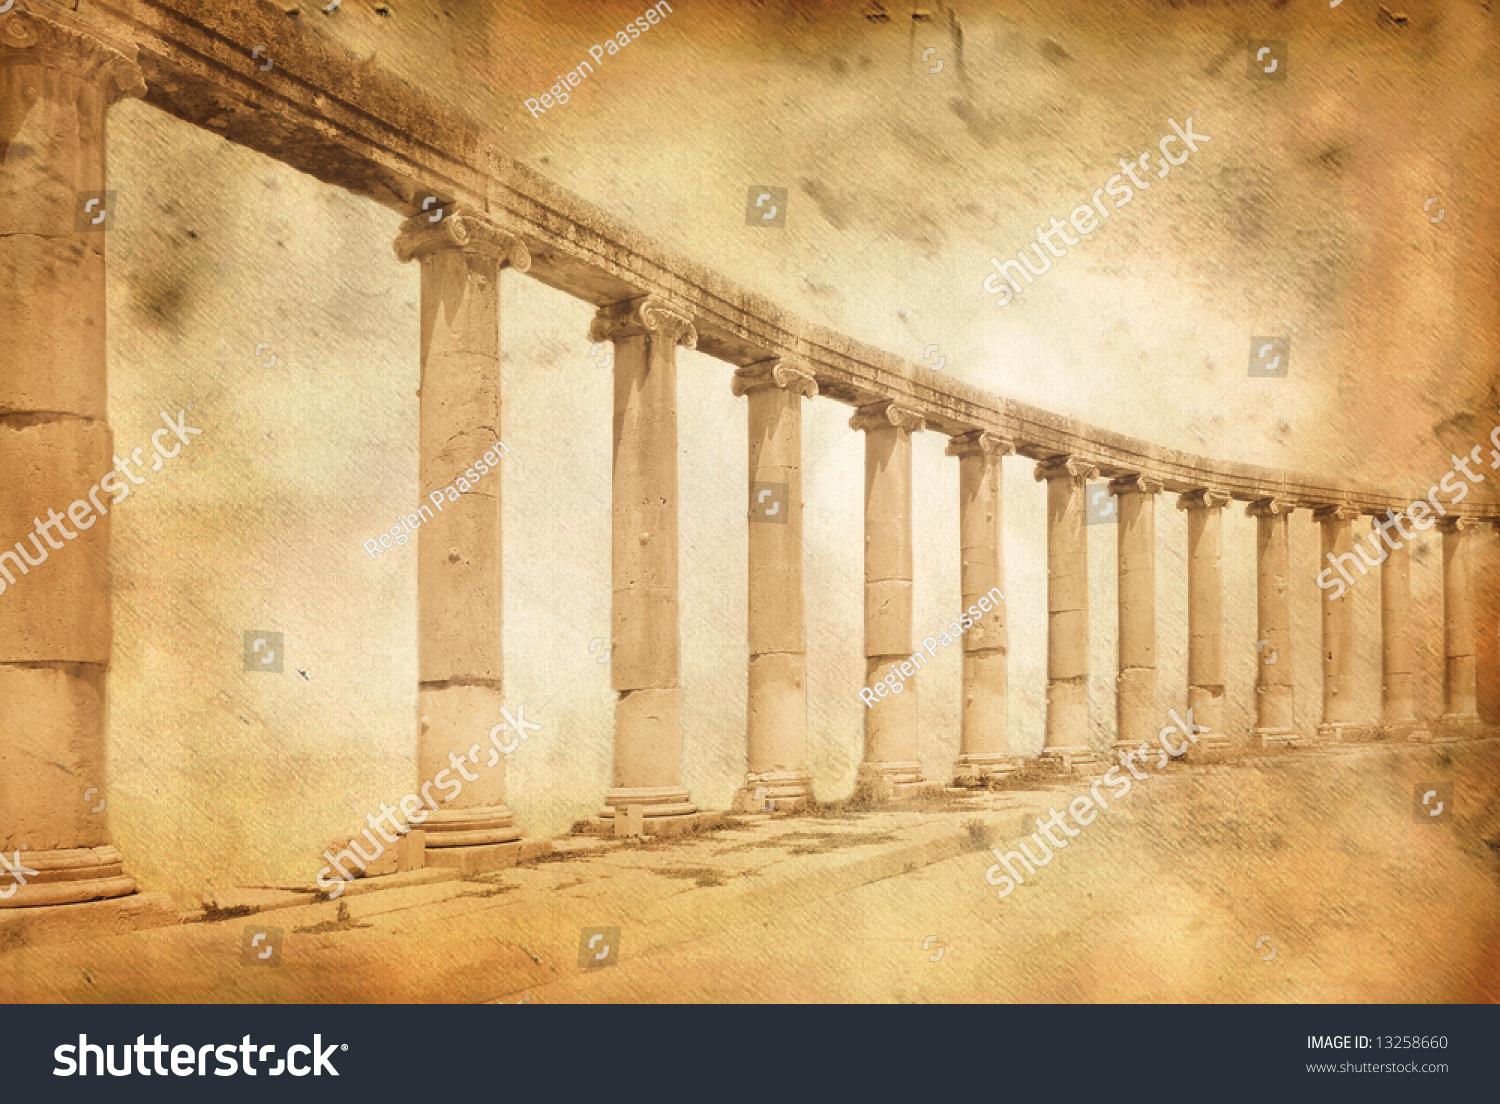 Roman architecture essays